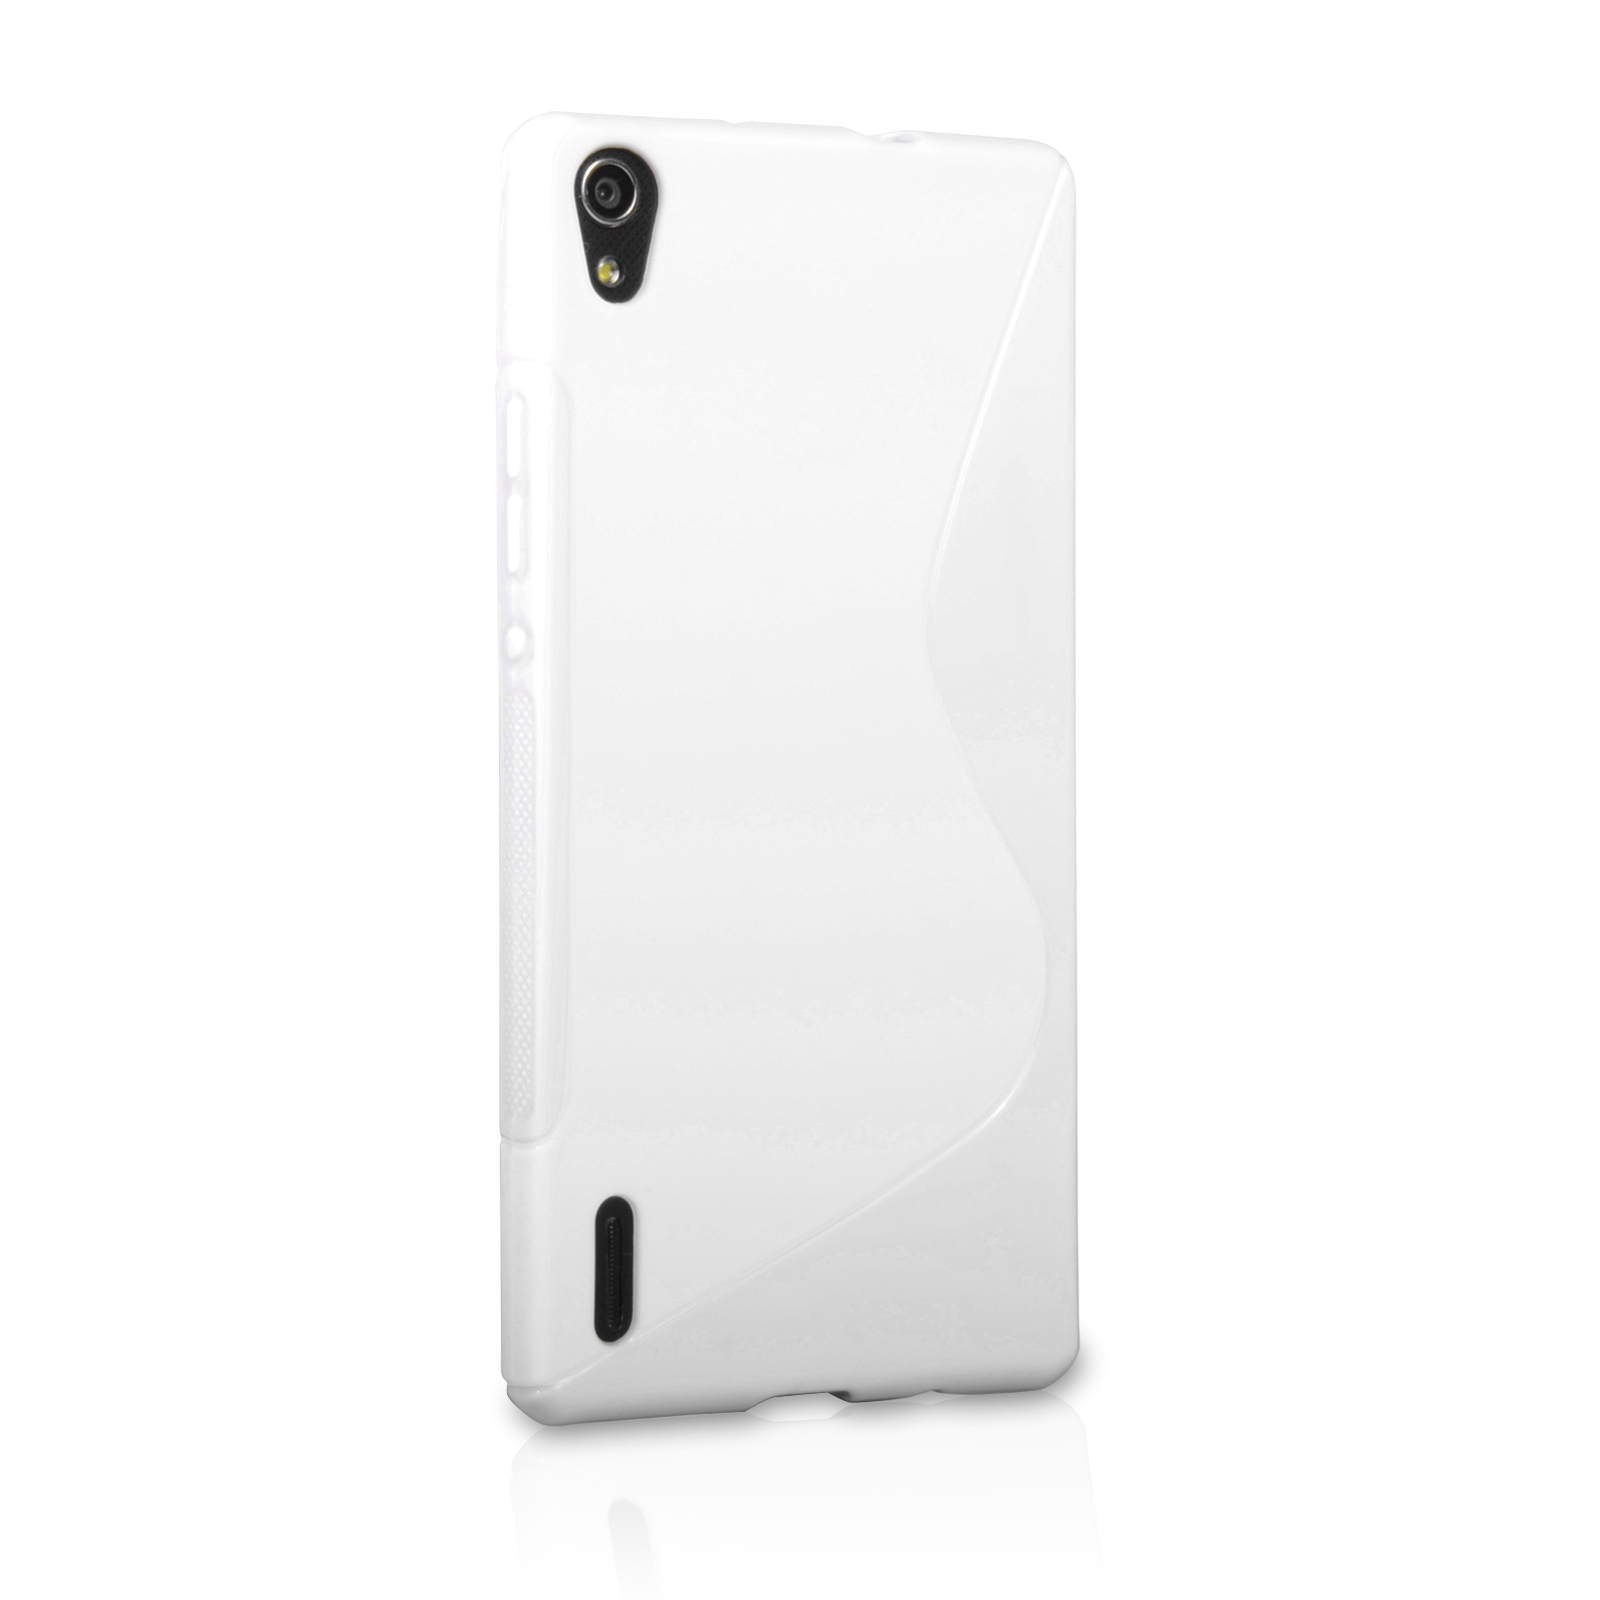 Caseflex Huawei Ascend P7 Silicone Gel S-Line Case - White